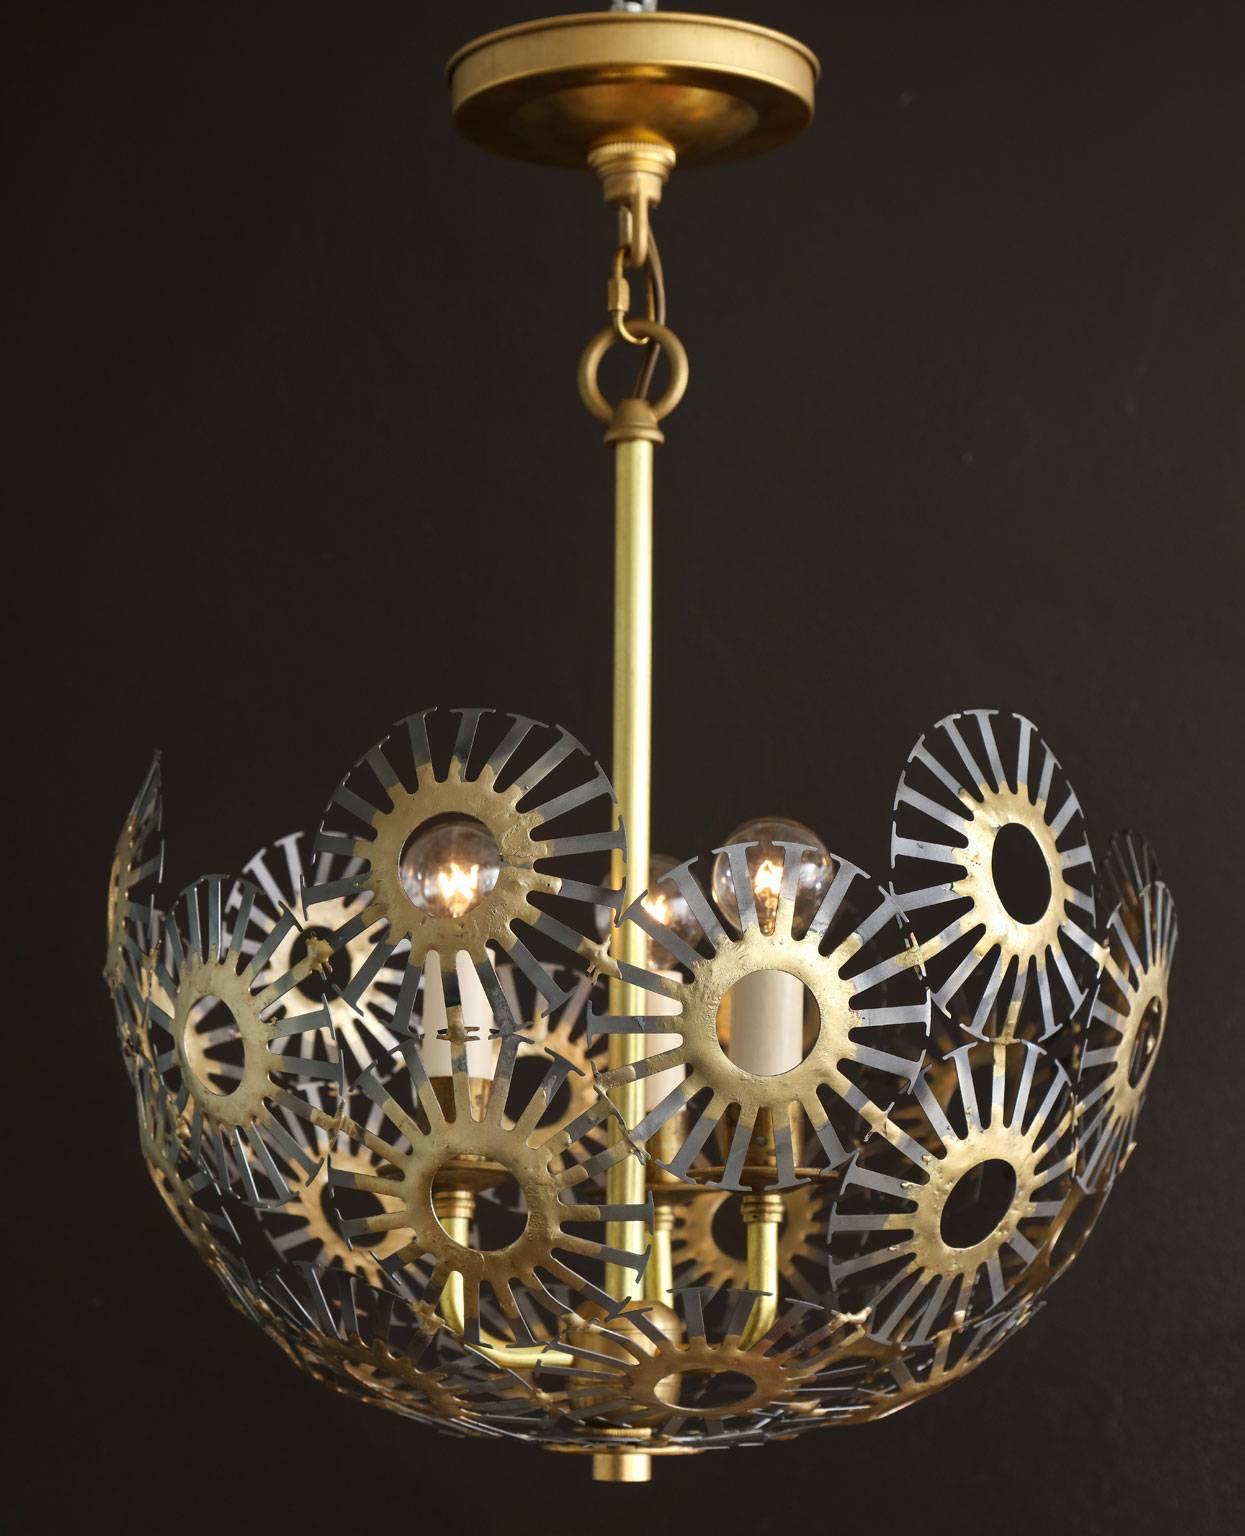 Marie Suri the Piera pendant light.
Hanging three-light chandelier composed of 4